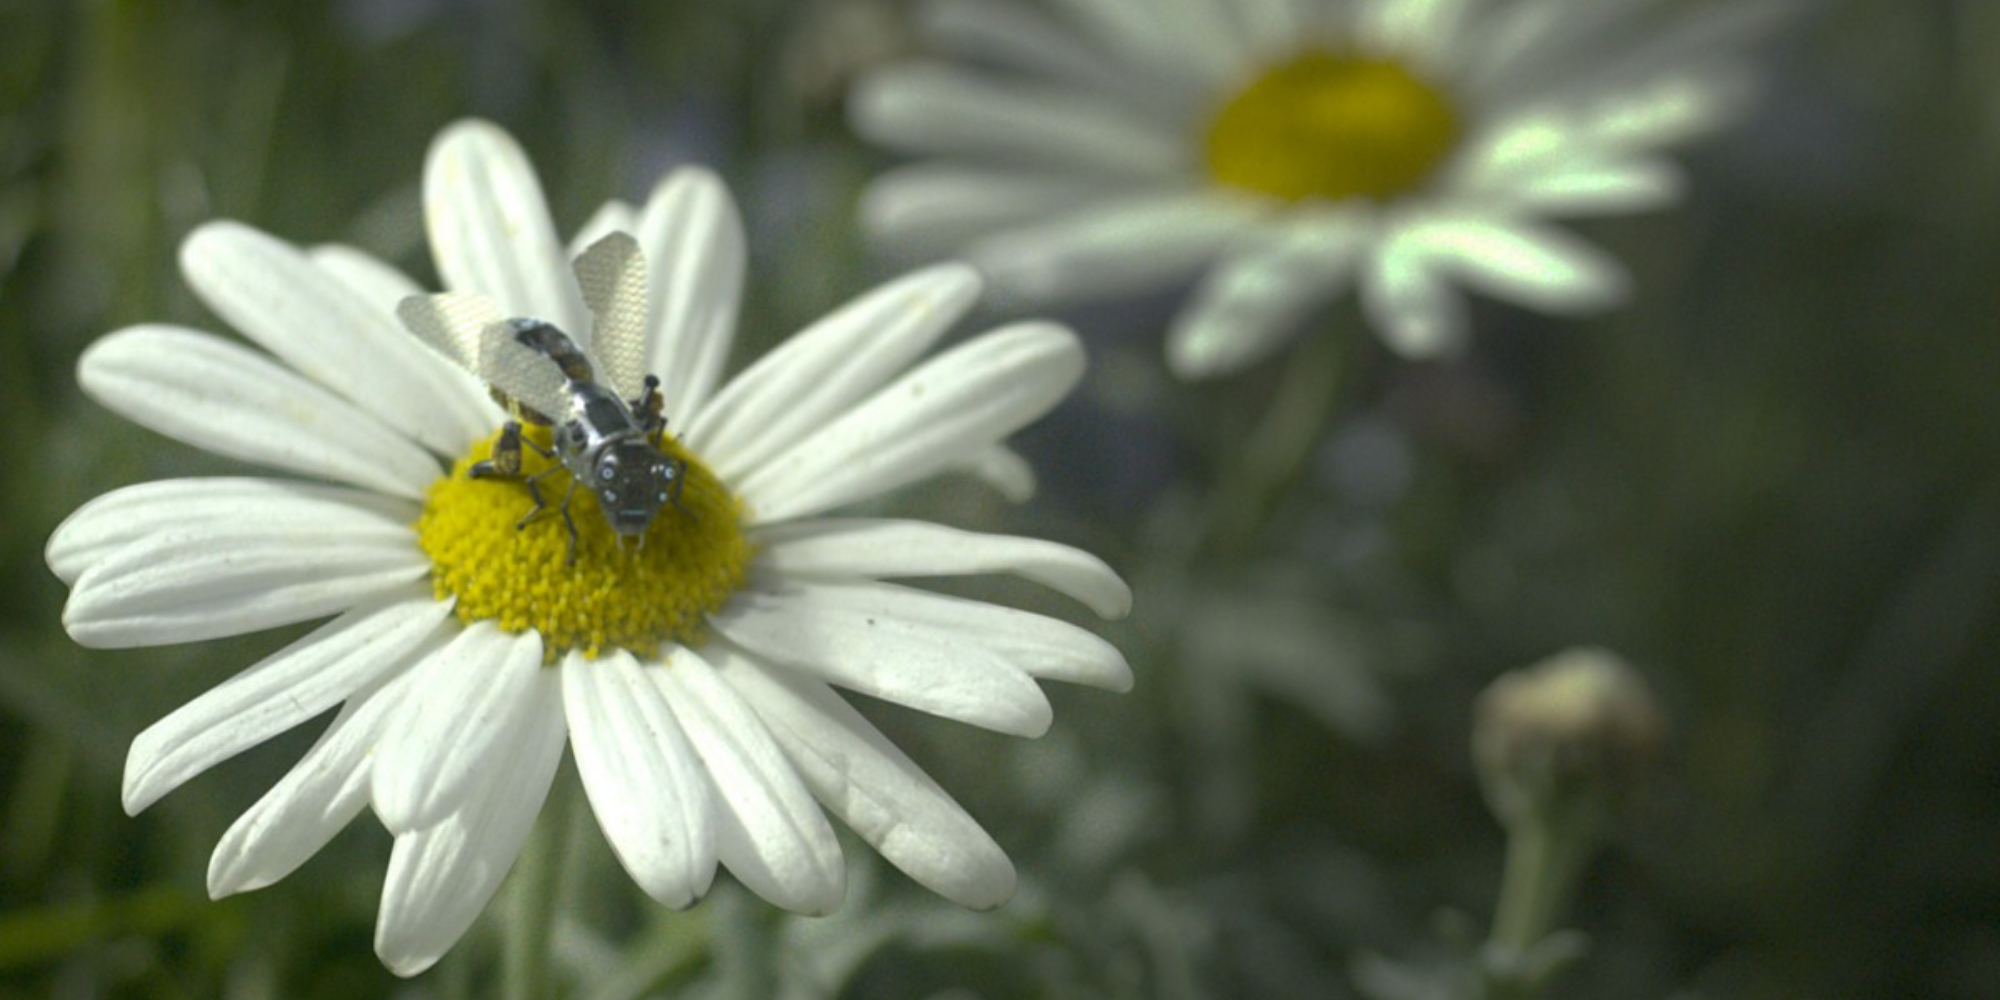 blackmirrorhatedinthenation nano bee is sitting on a flower